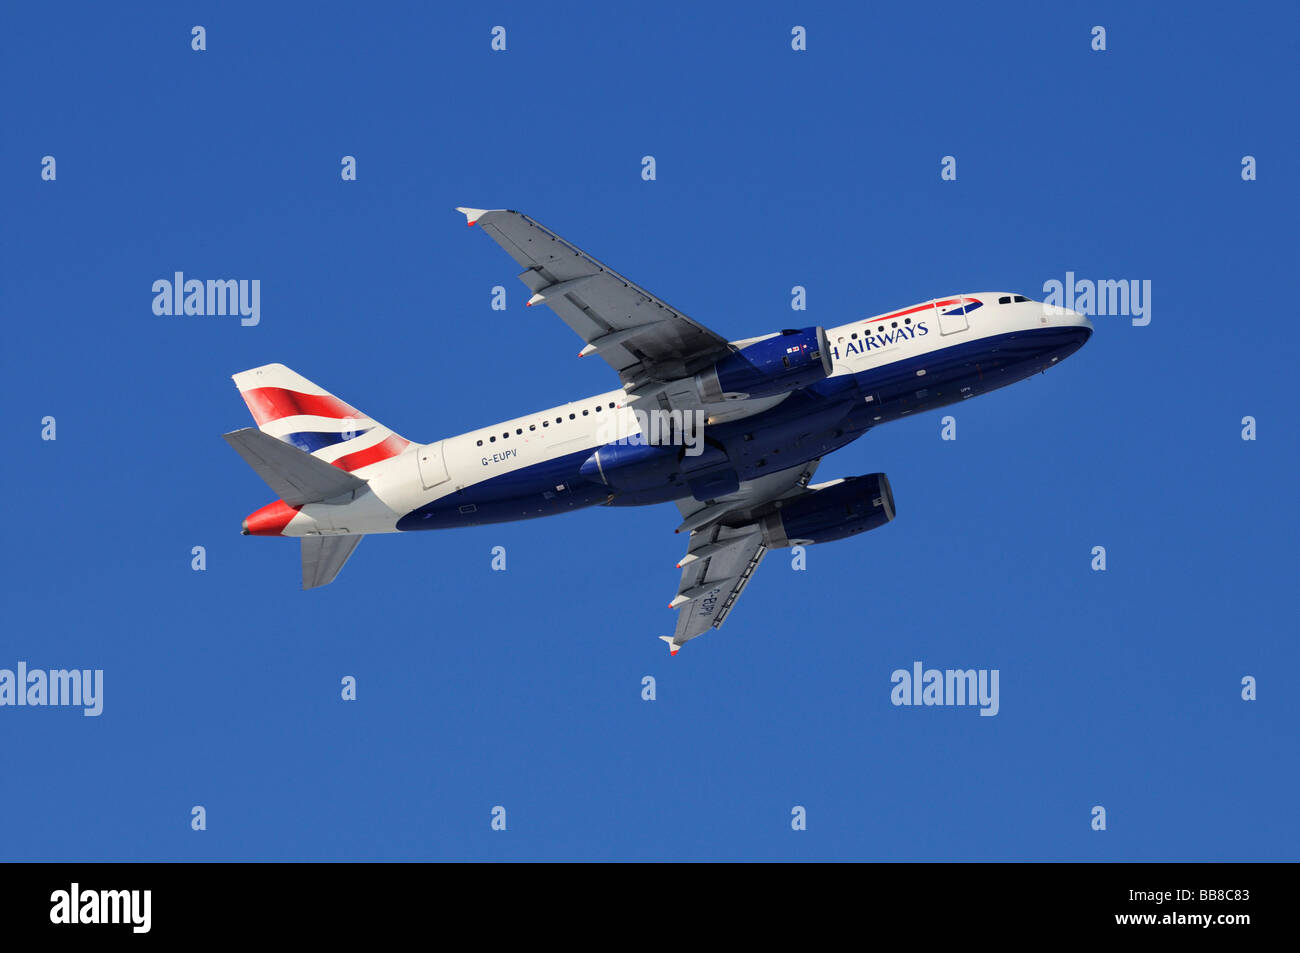 Aeromobili commerciali, British Airways, Airbus A319, arrampicata contro un cielo blu Foto Stock